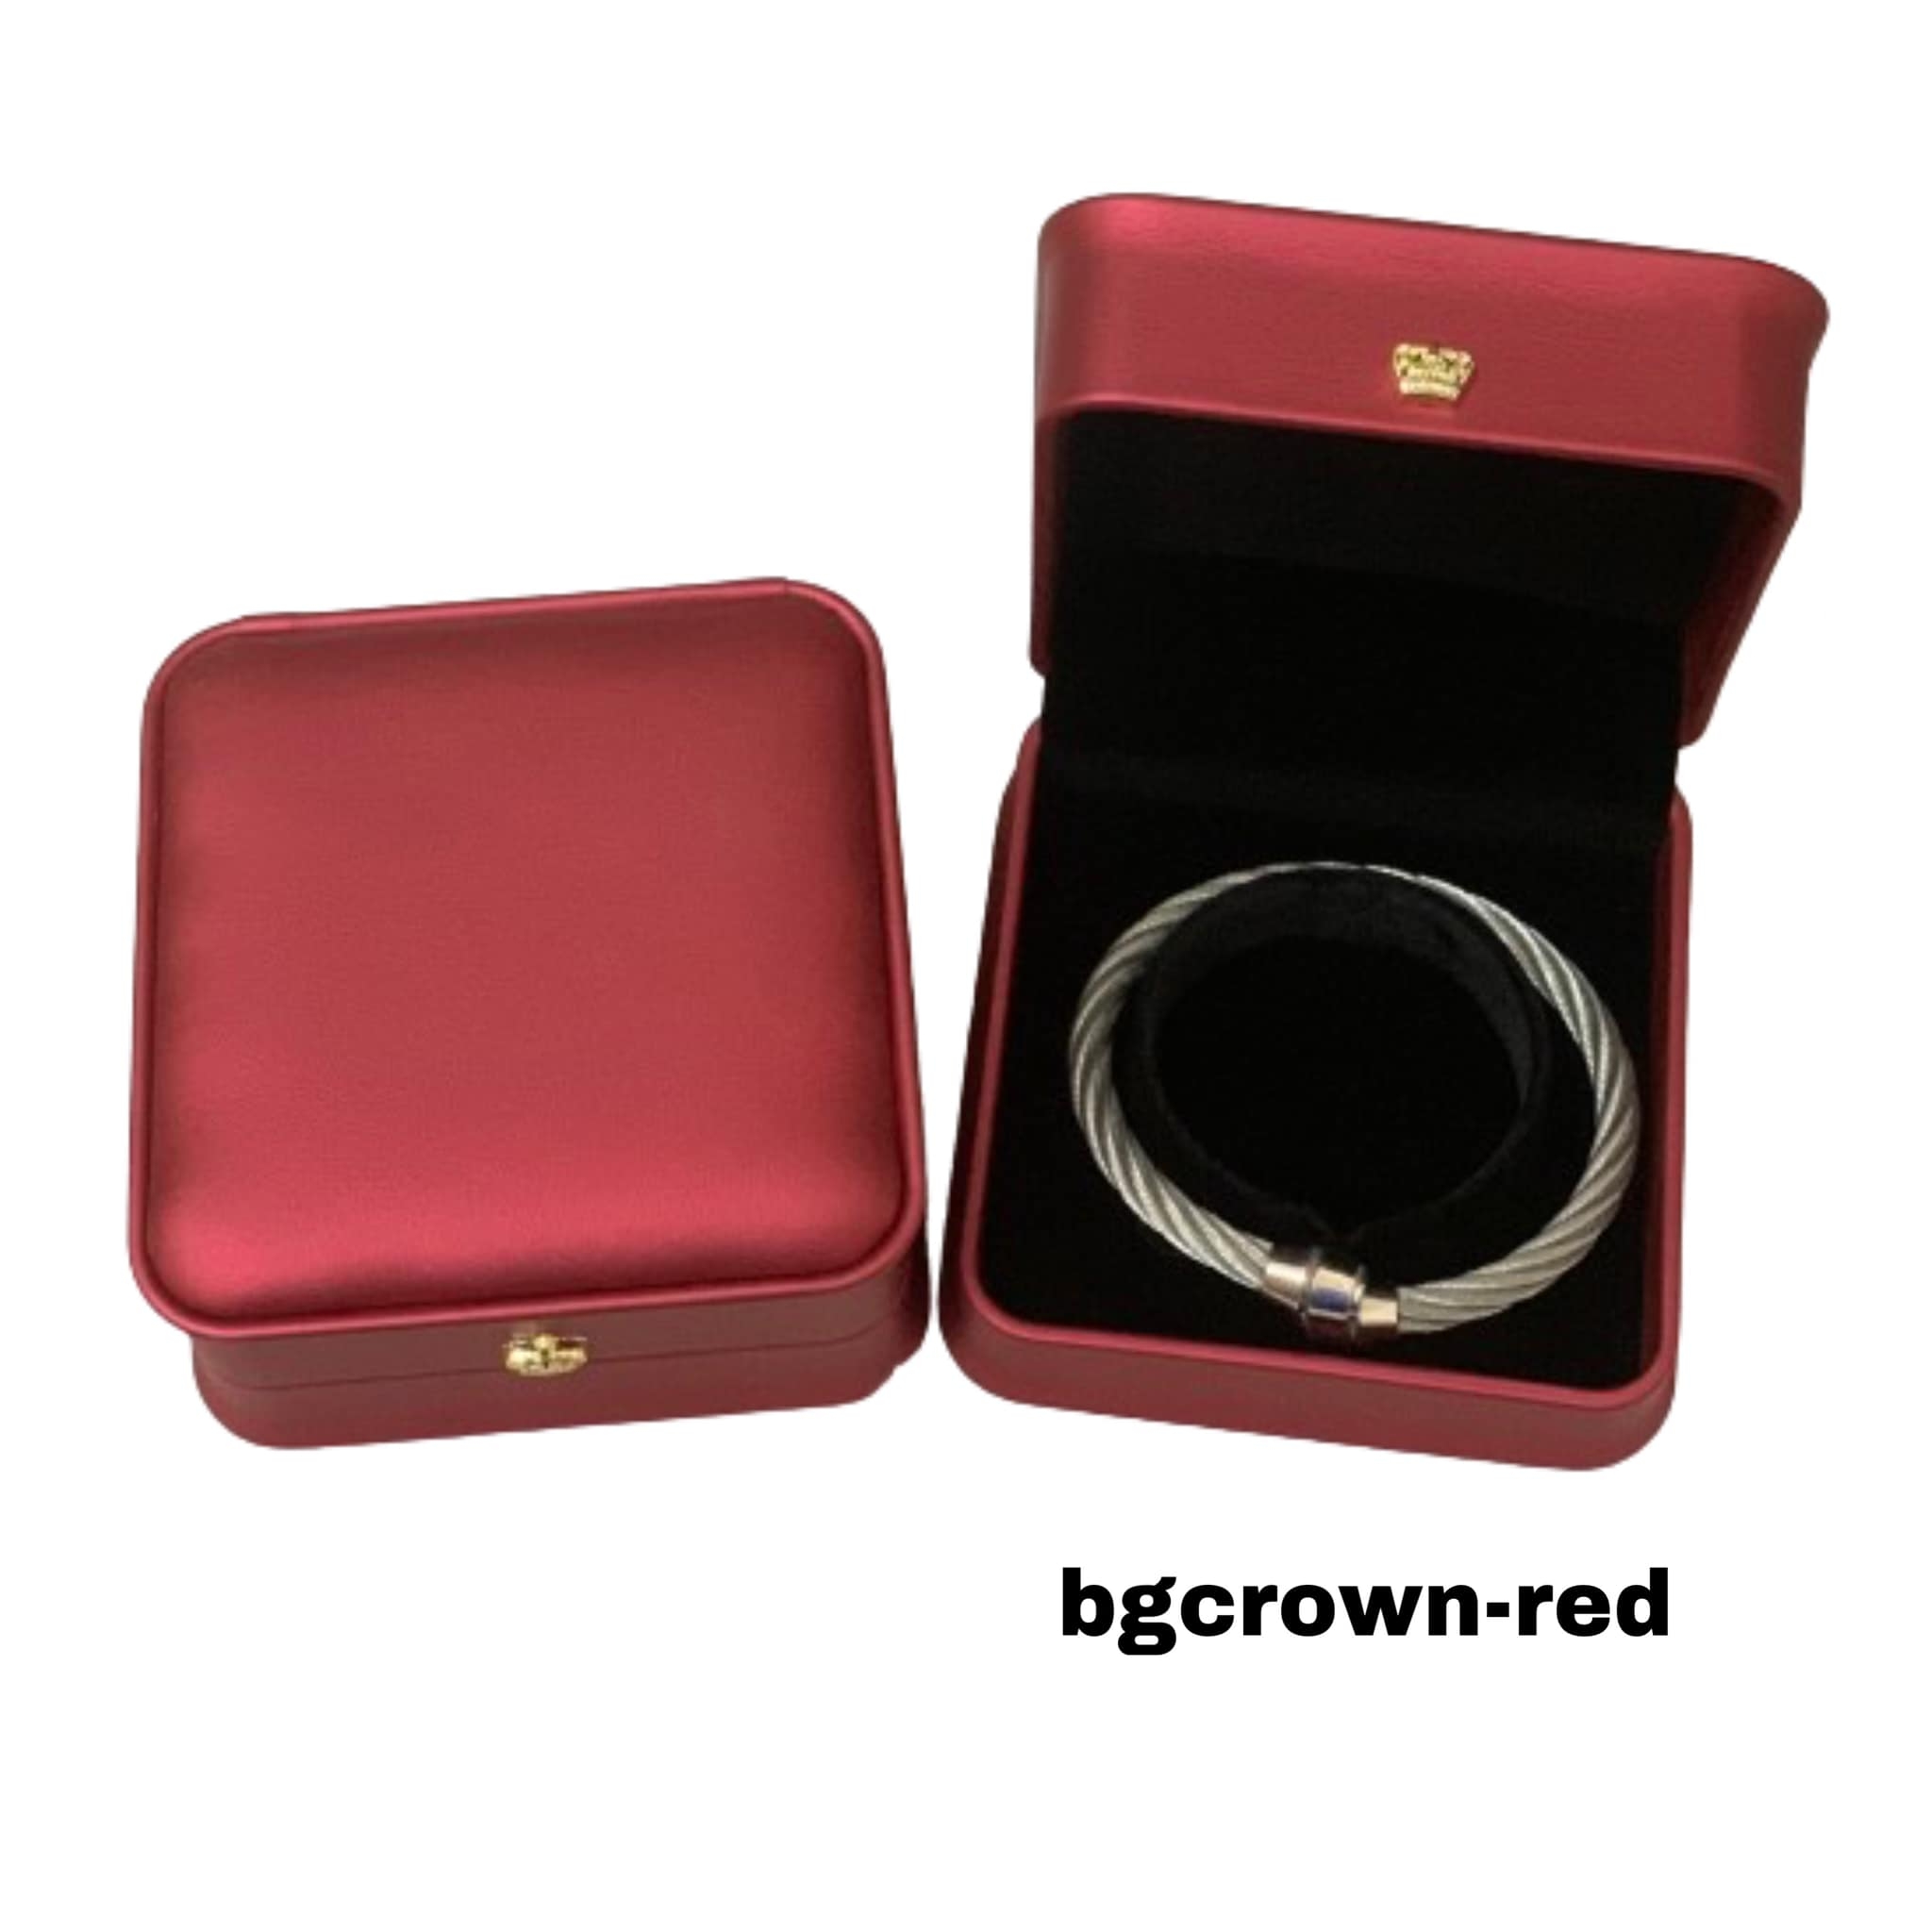 bgcrown-red